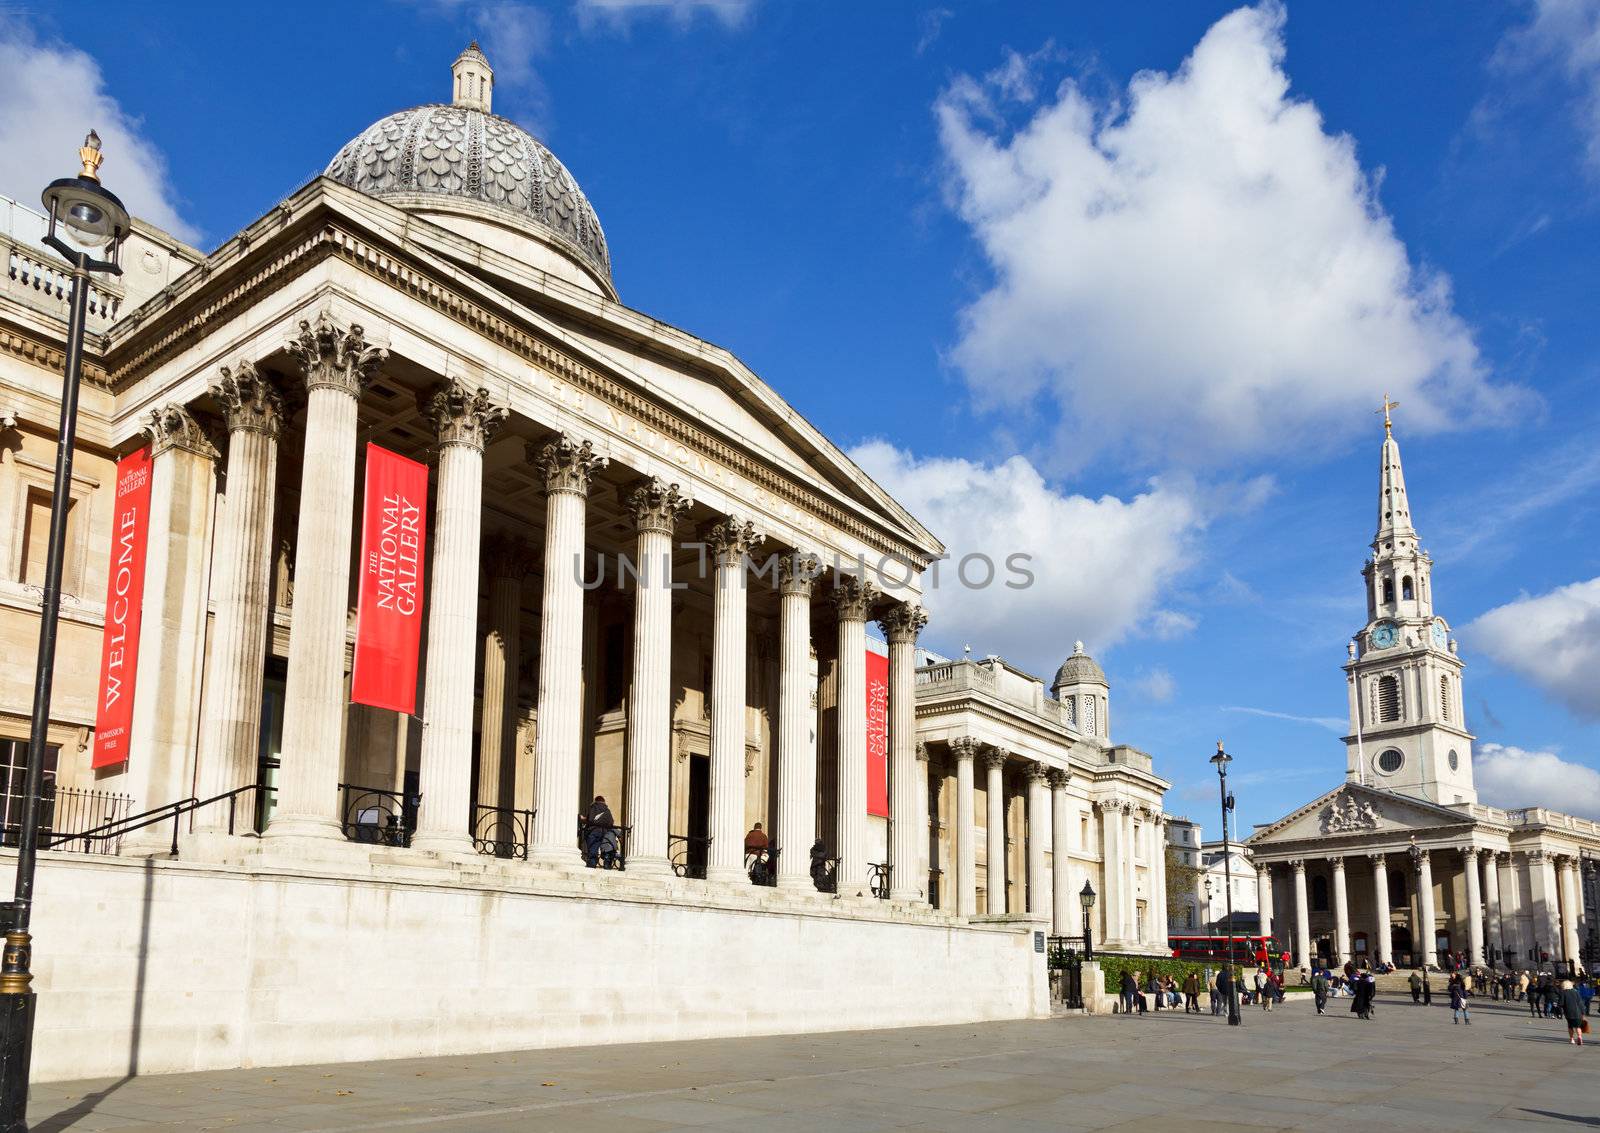 National Gallery in London by naumoid